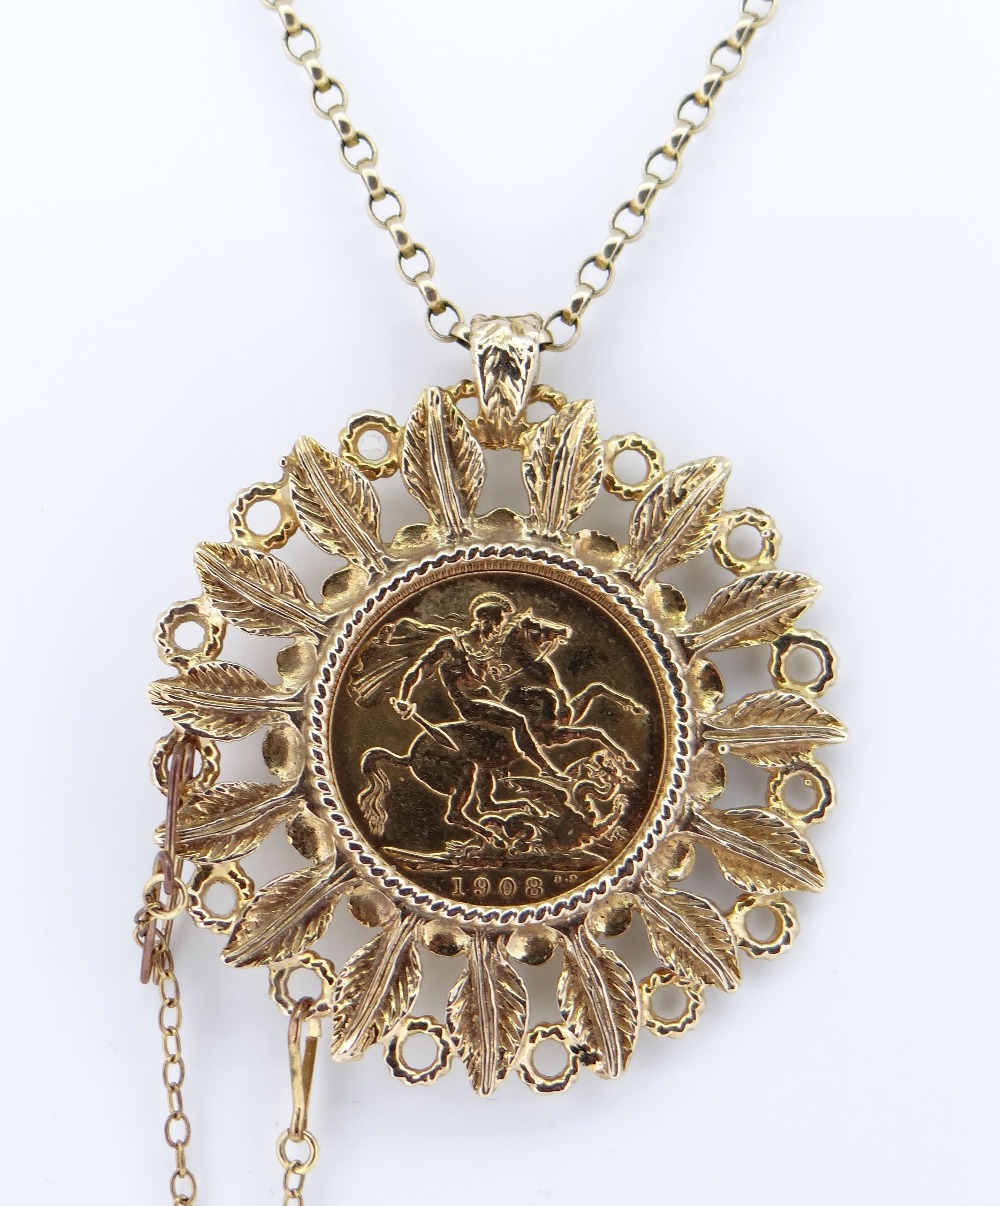 EDWARD VII GOLD SOVEREIGN, 1908, in 9ct gold leaf design pendant mount, on 9ct gold chain, 26.0gms